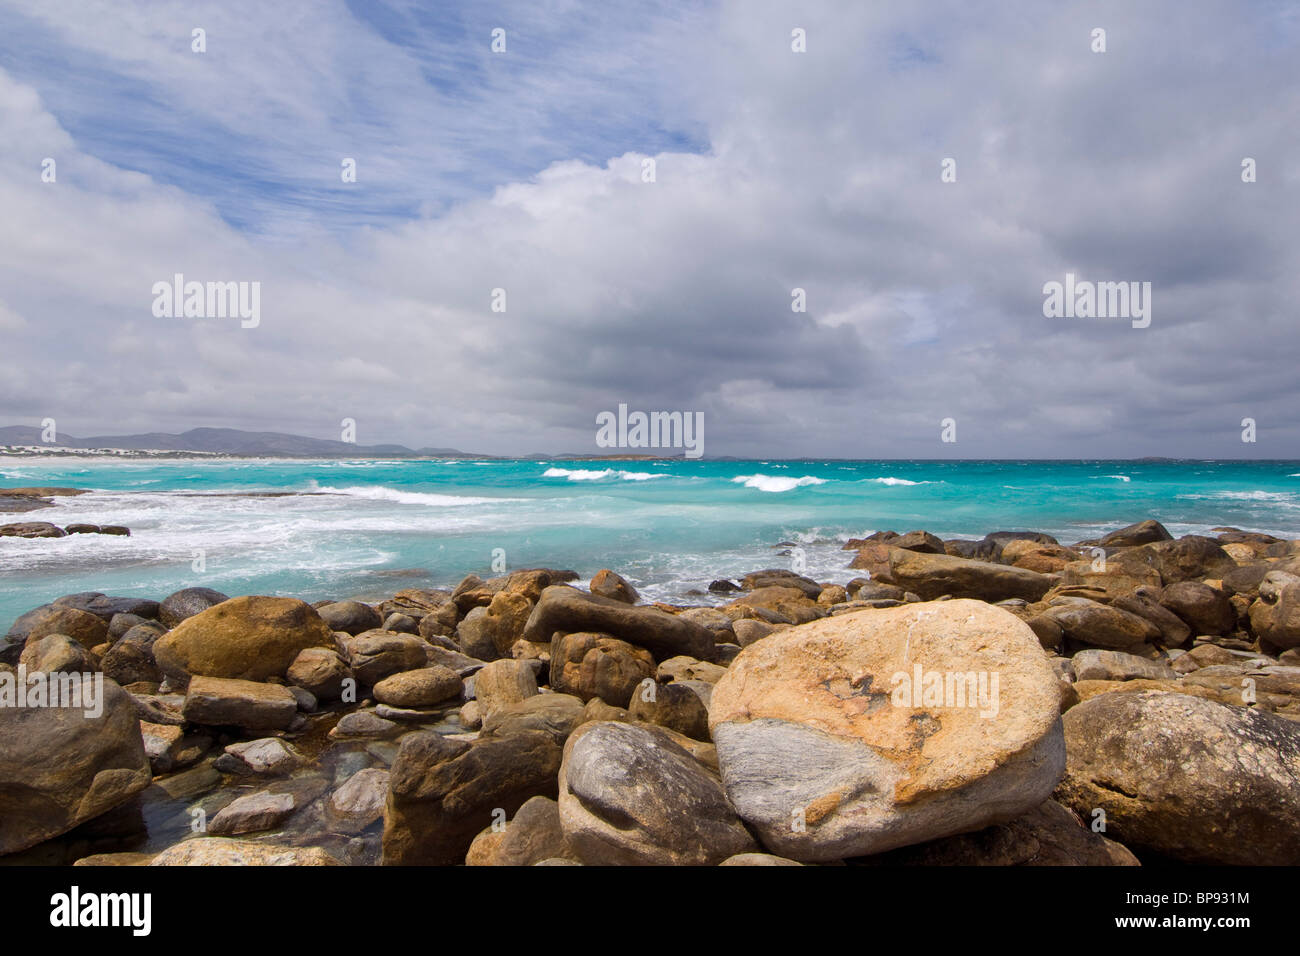 Rocky shoreline and turquoise water at Cape Arid, Cape Arid National Park, Western Australia. Stock Photo